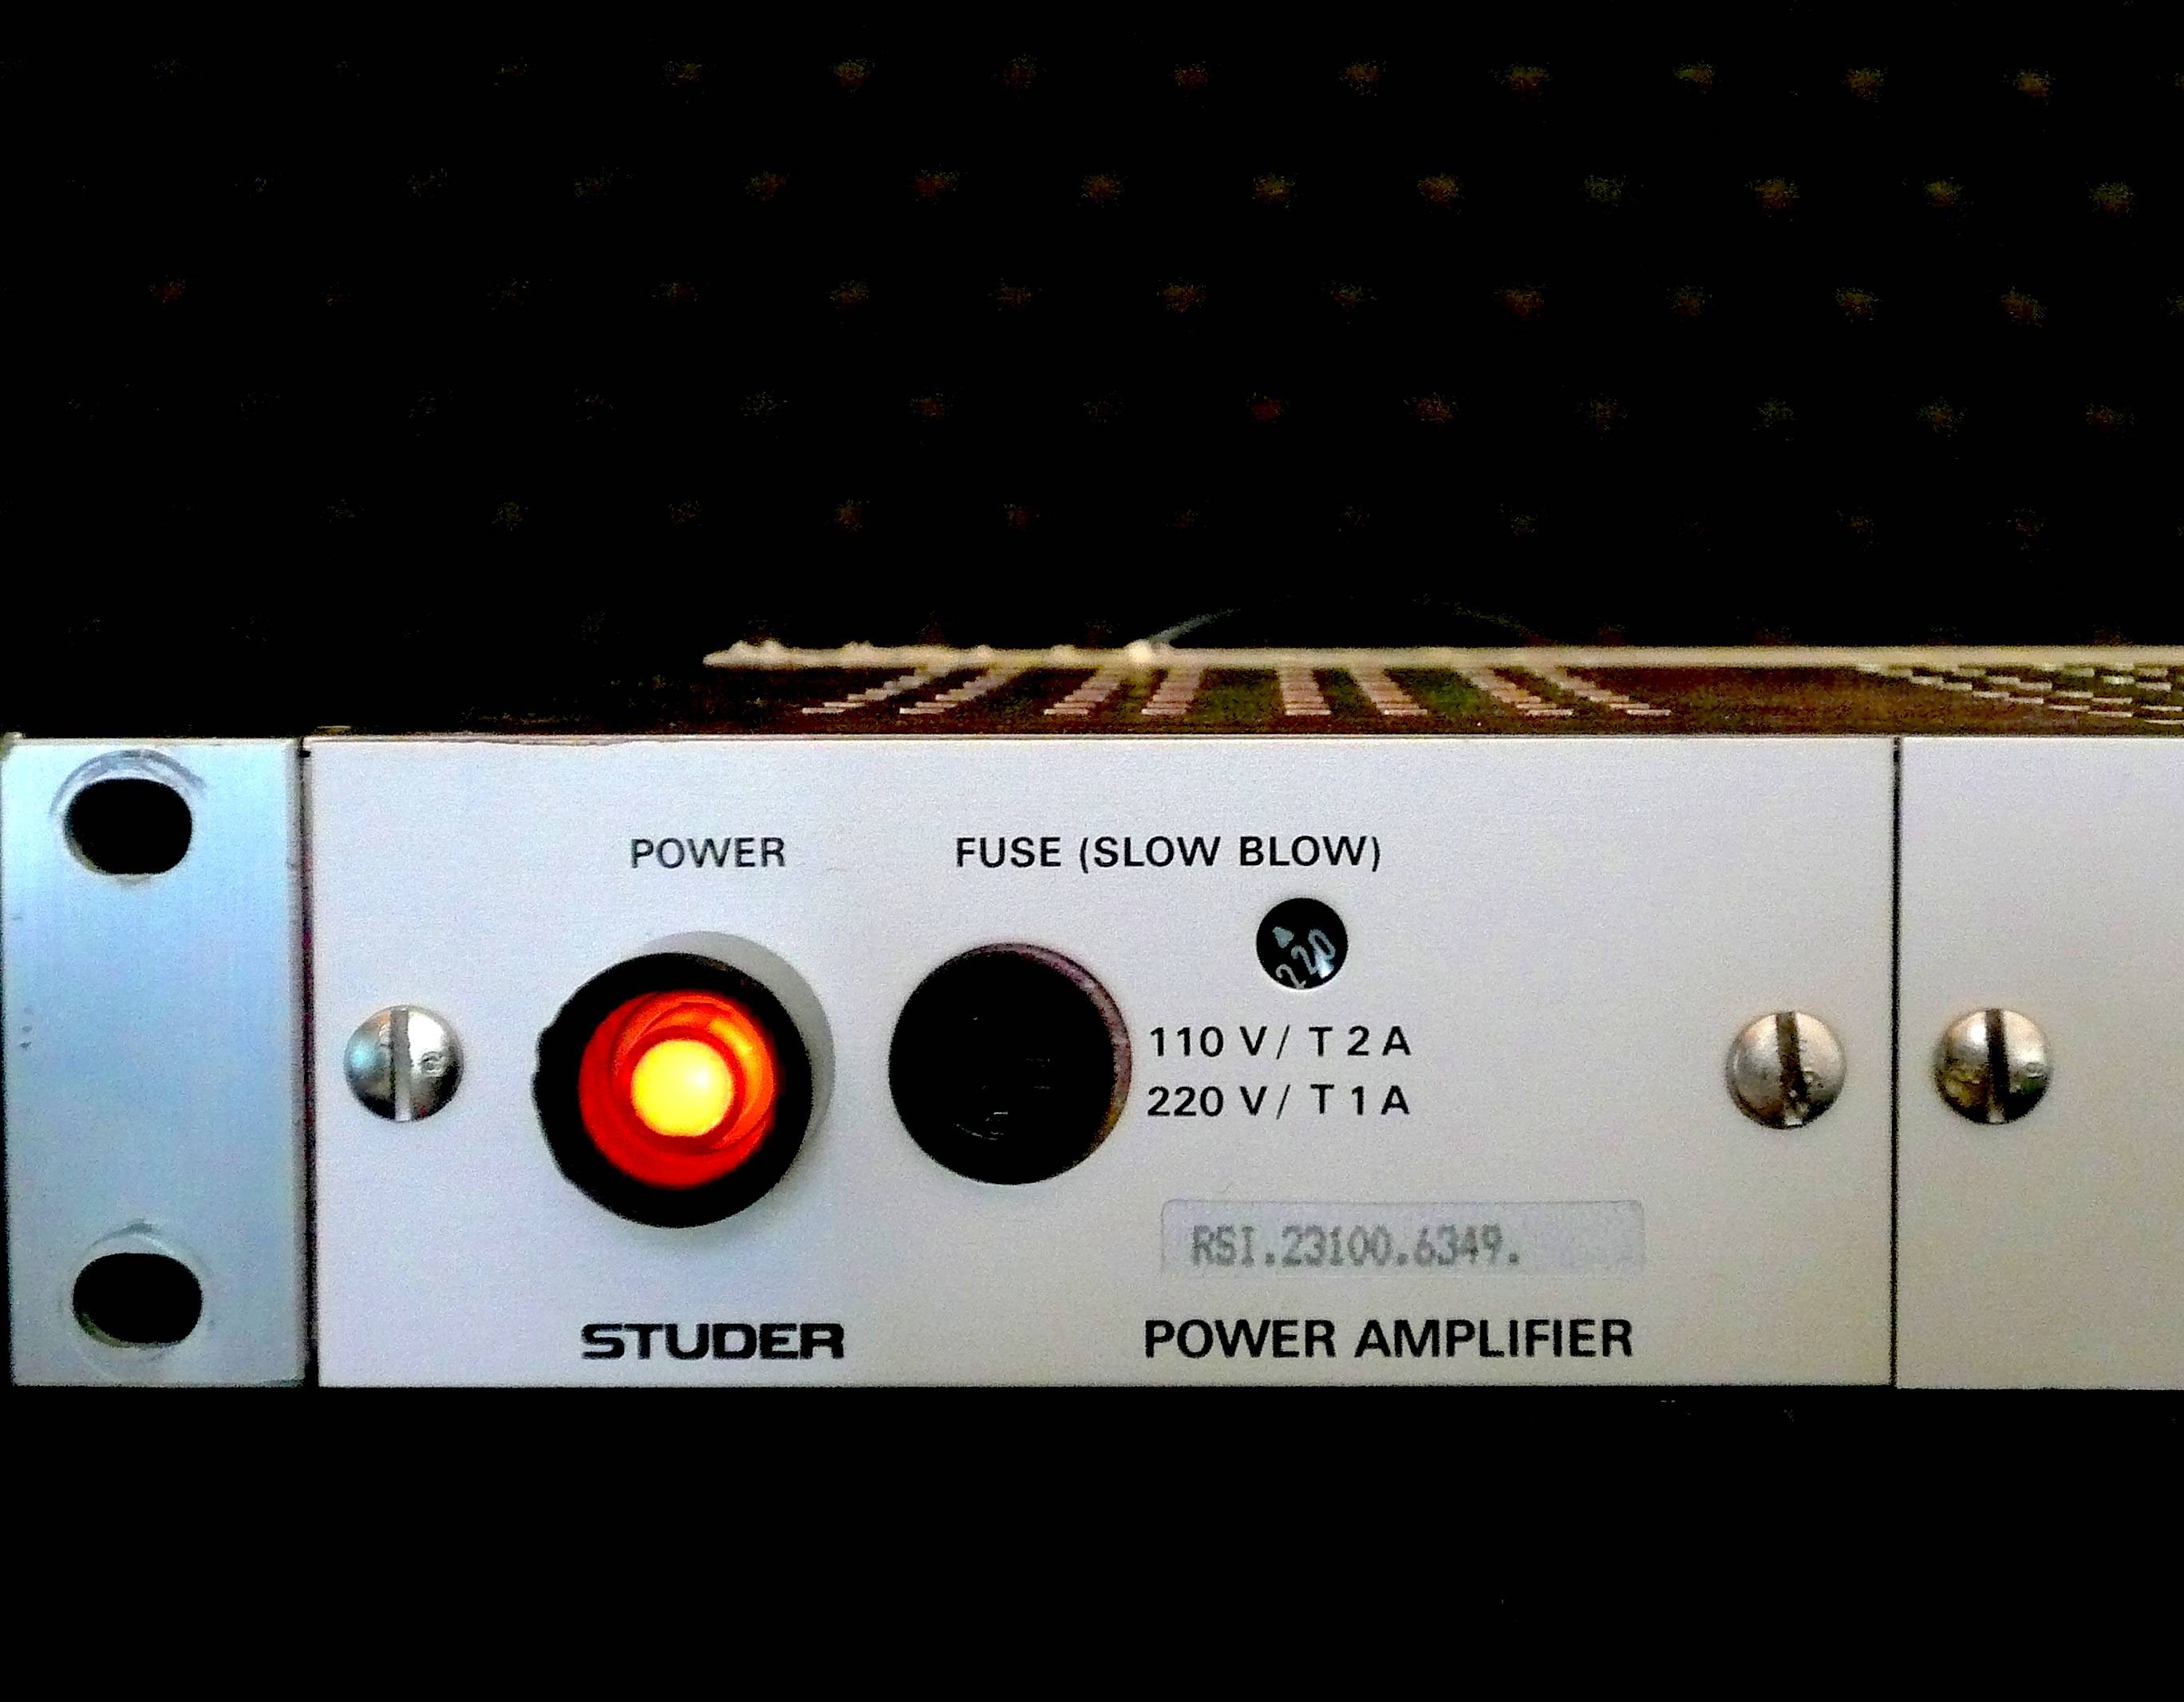 Studer 40W Power Amp